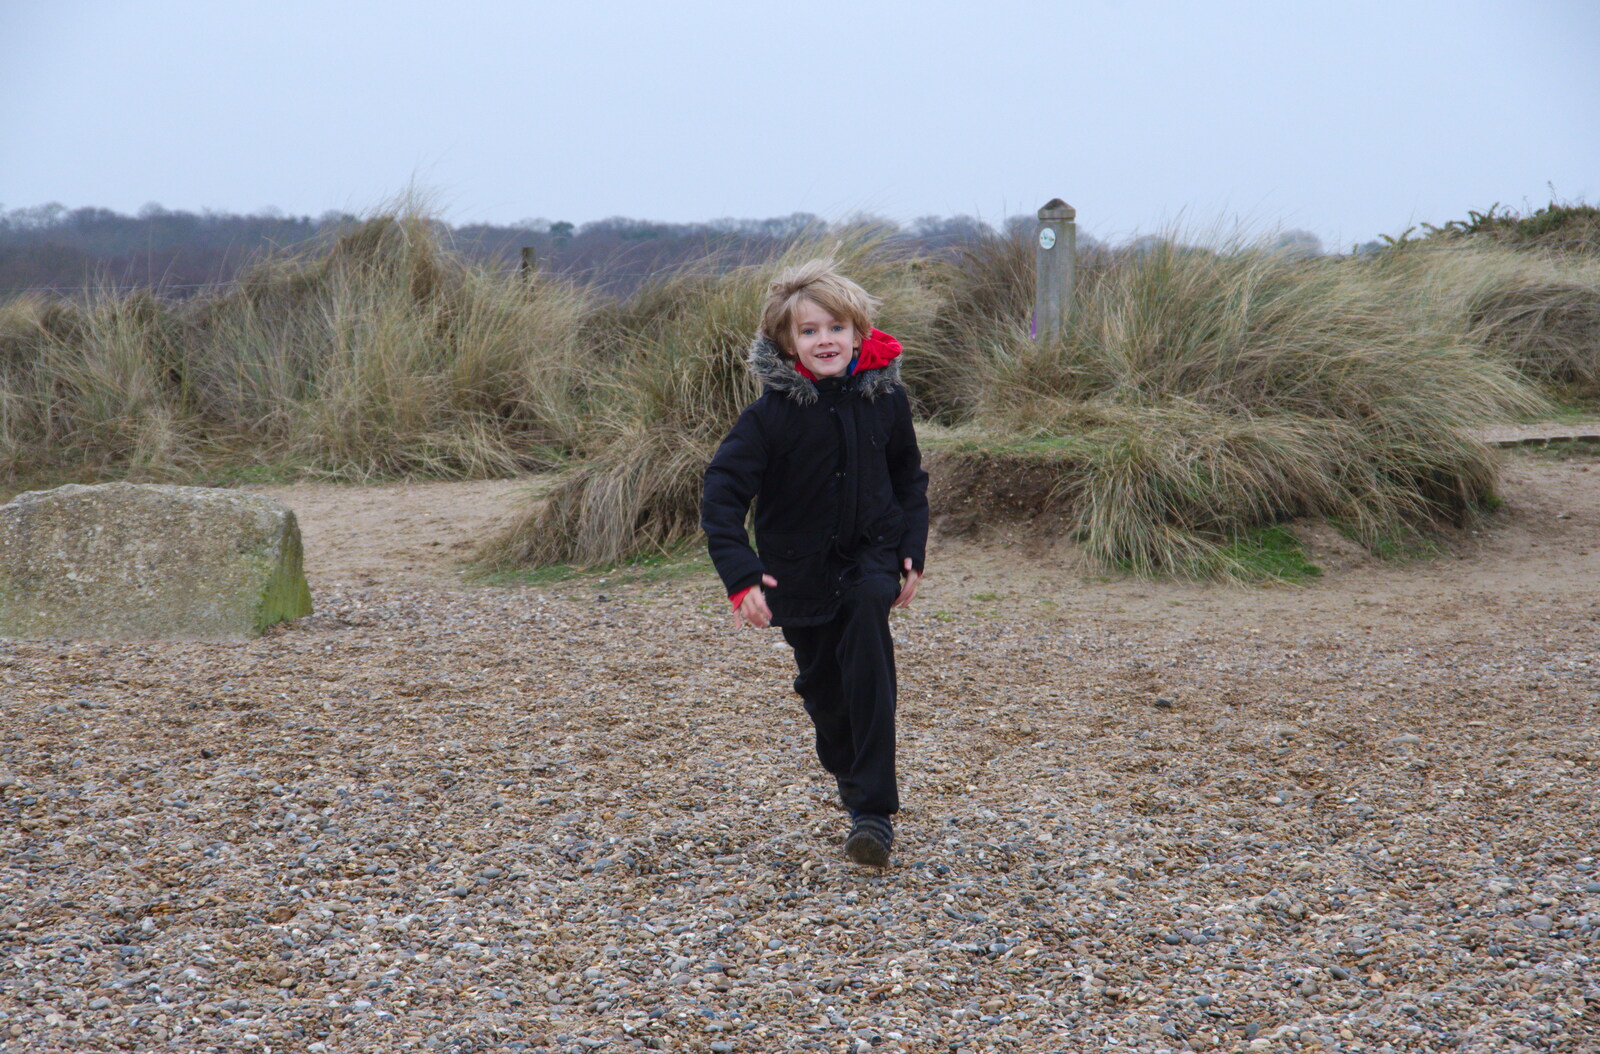 Harry runs about from A Trip to the Beach, Dunwich Heath, Suffolk - 27th December 2019